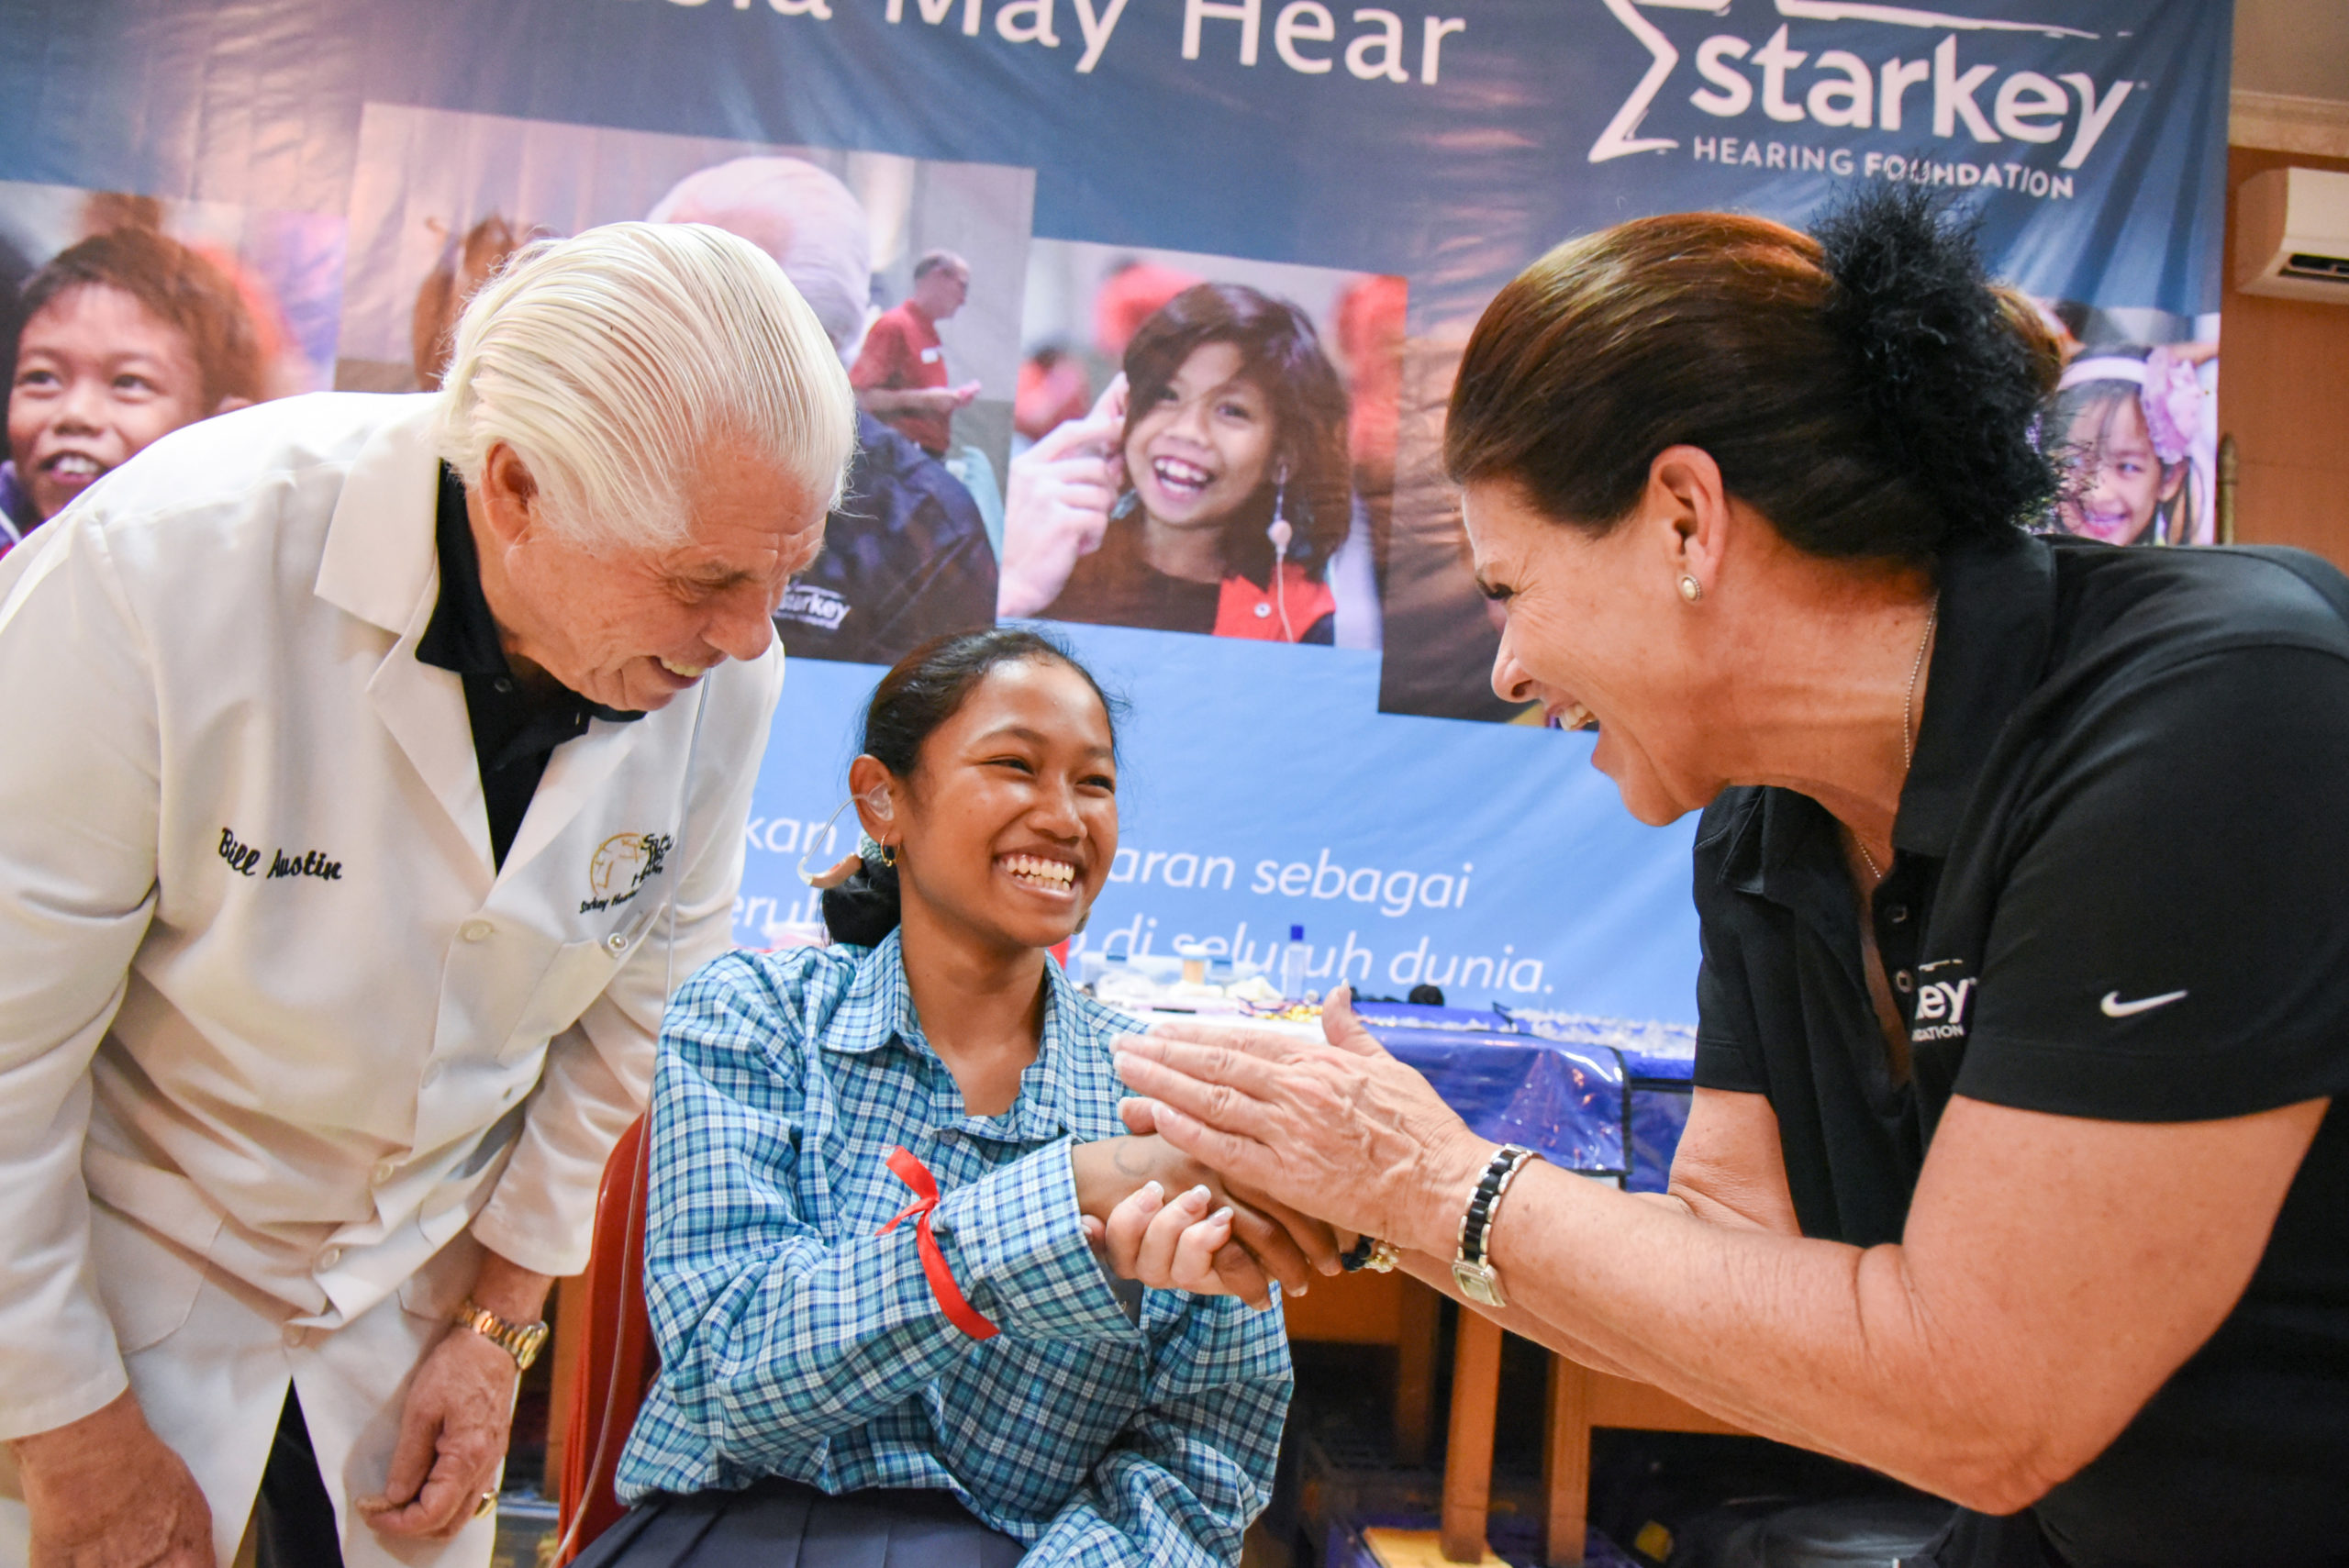 Starkey Hearing Foundation’s Impact Around the World